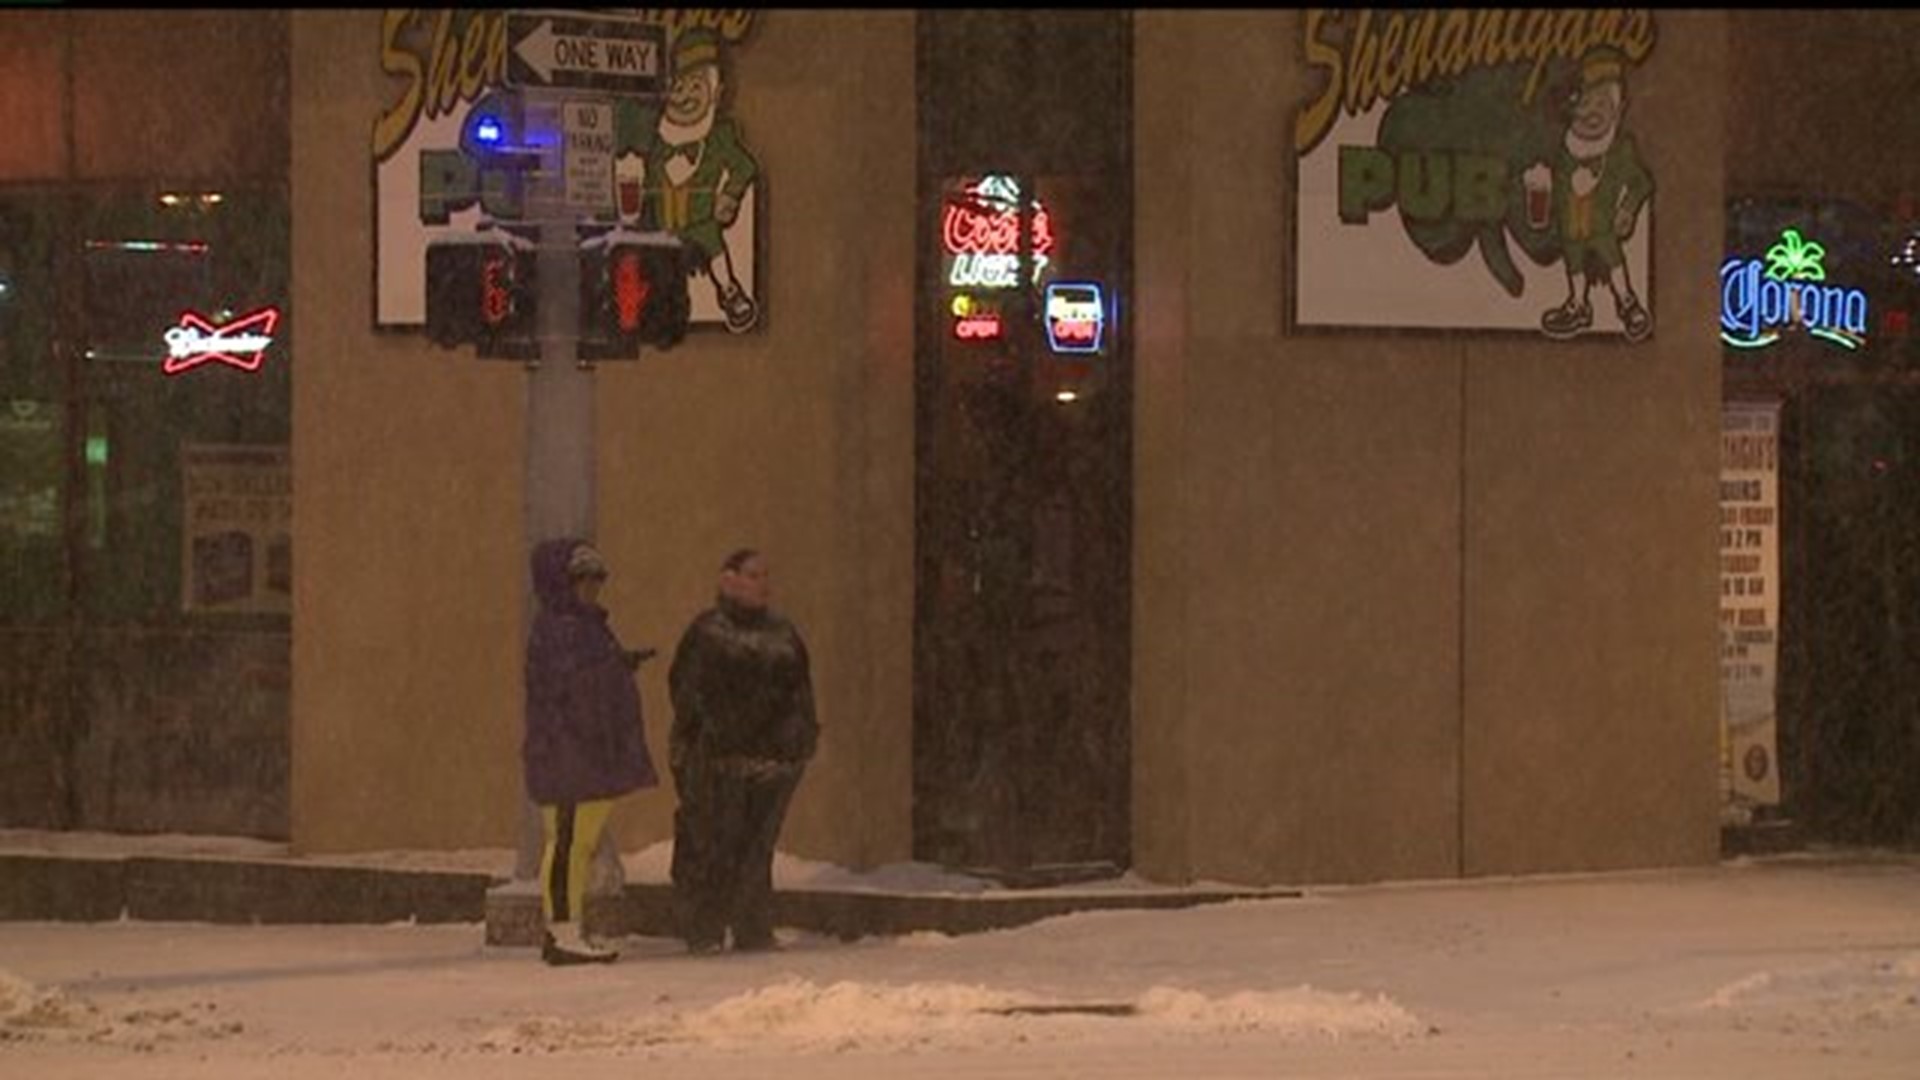 Snow emergency lights in Davenport